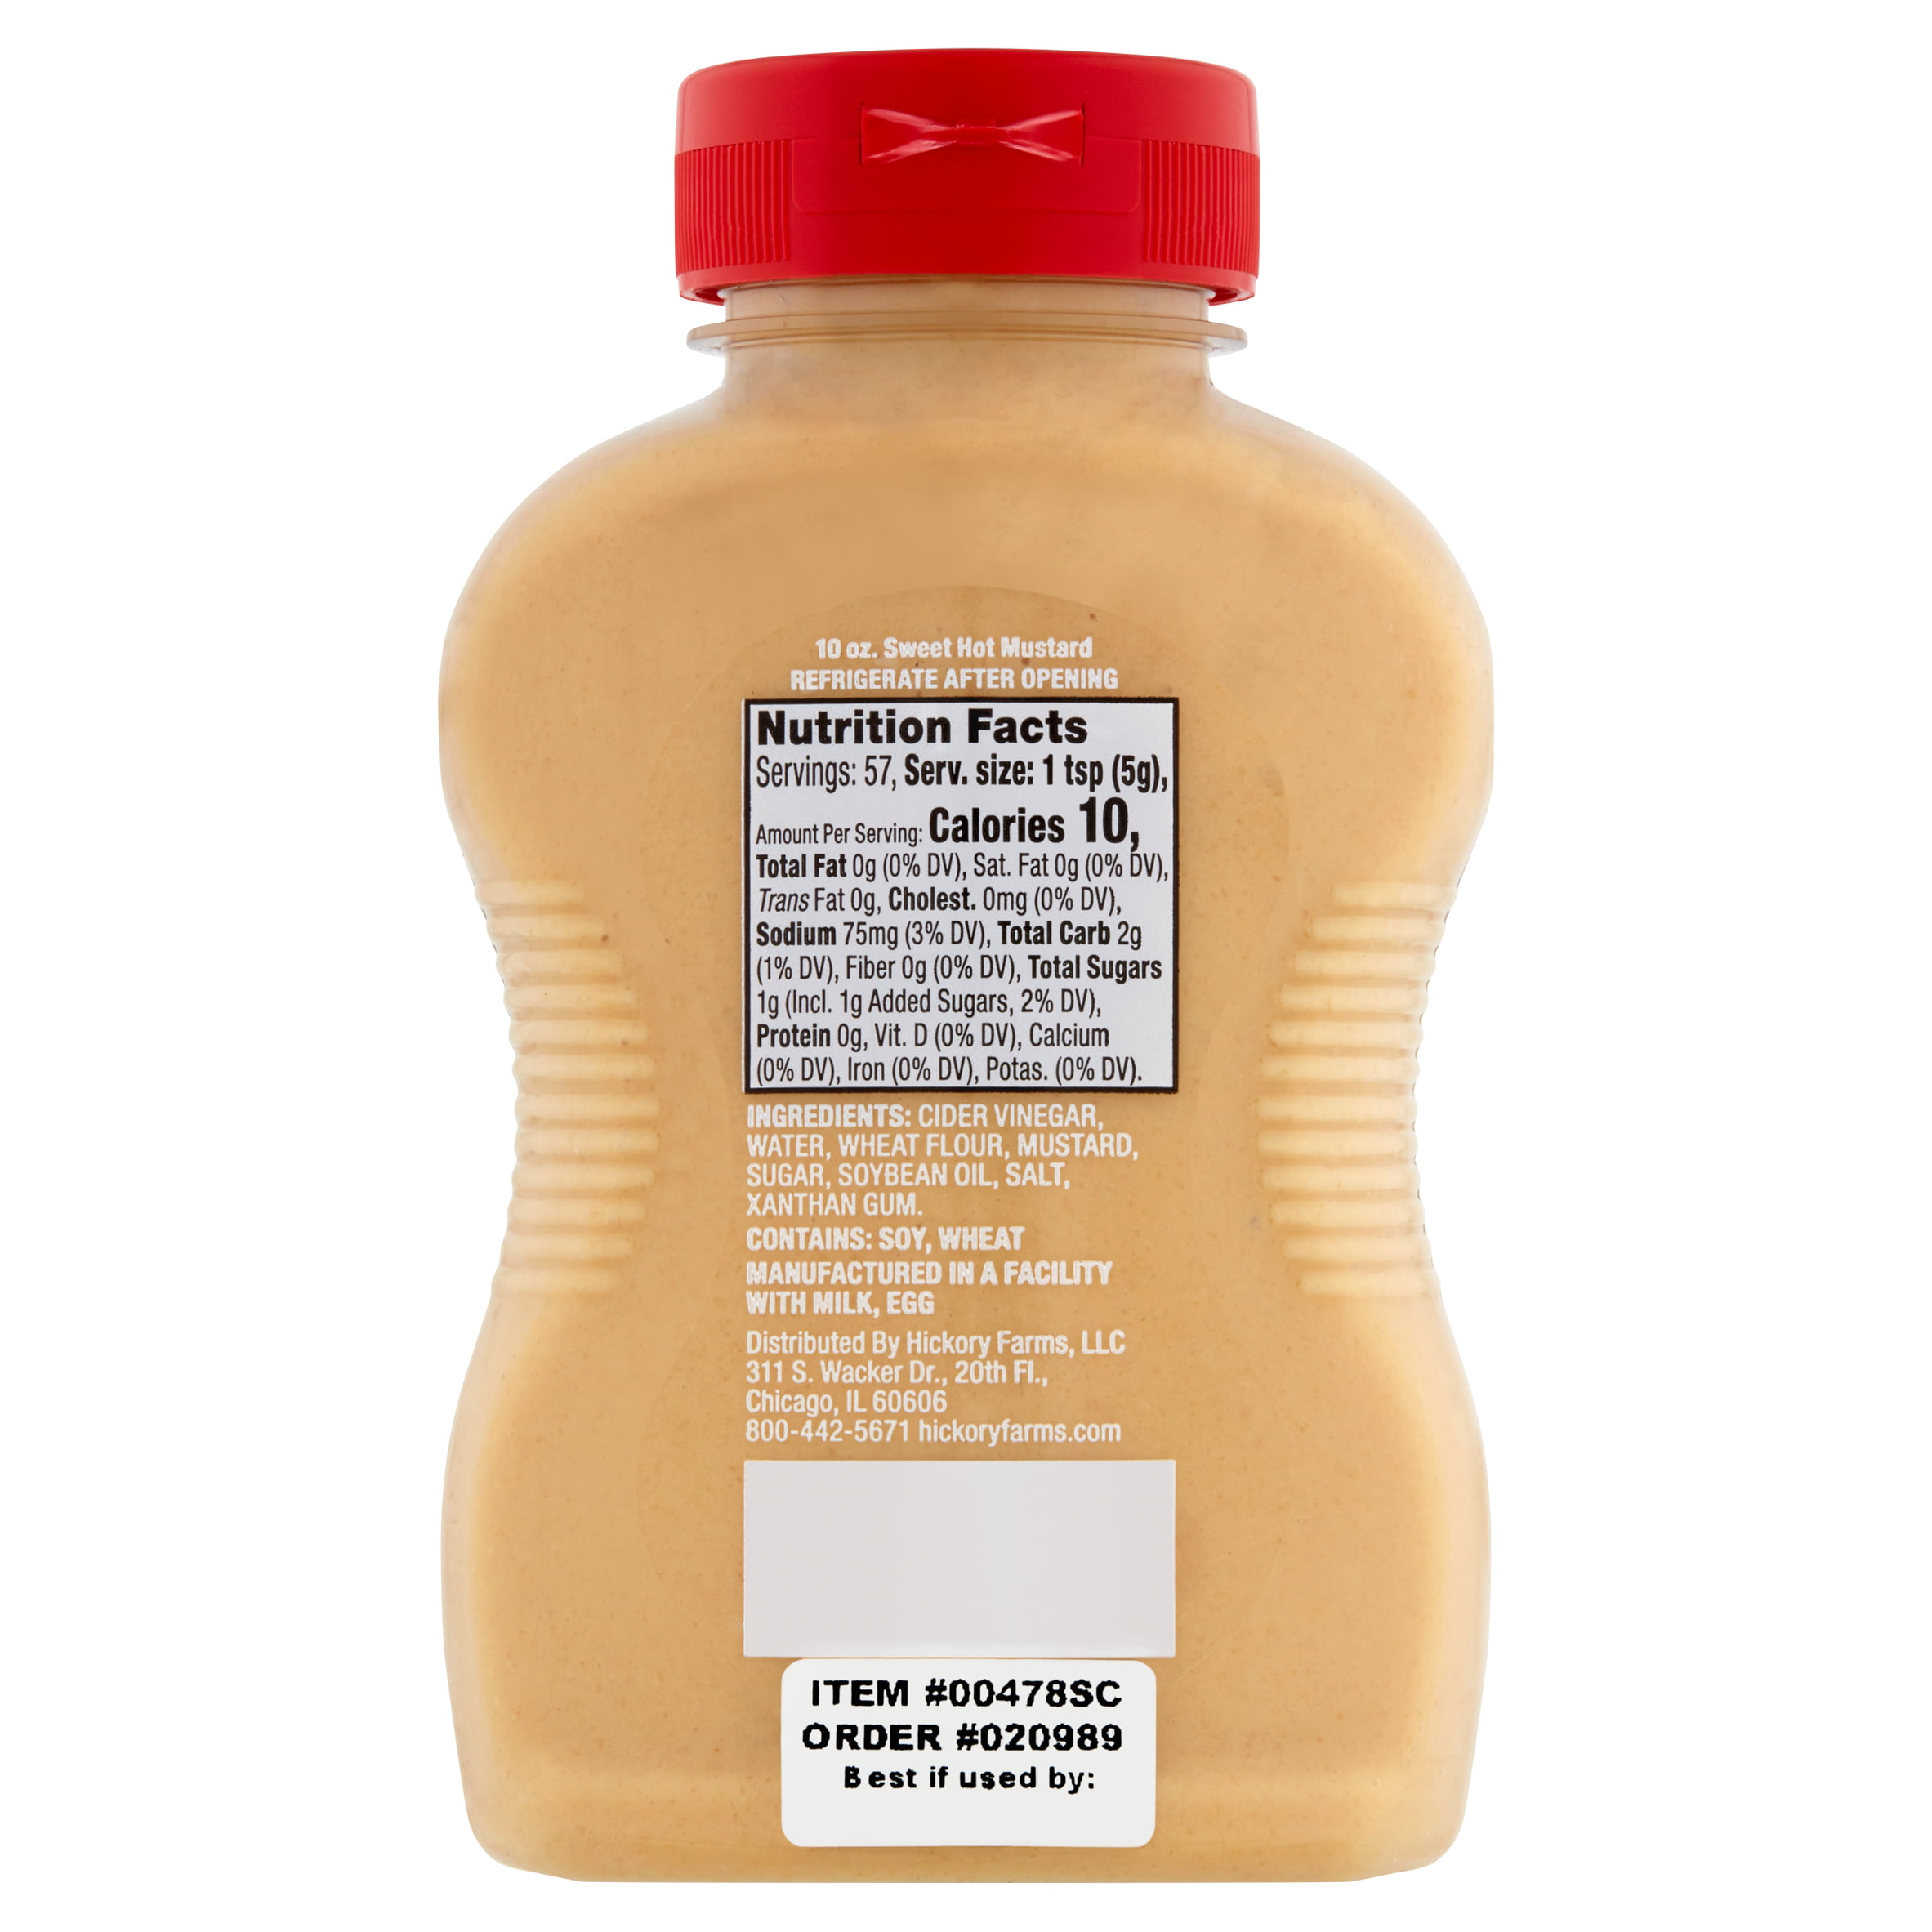 Hickory Farms Sweet Hot Mustard - 1.25 oz